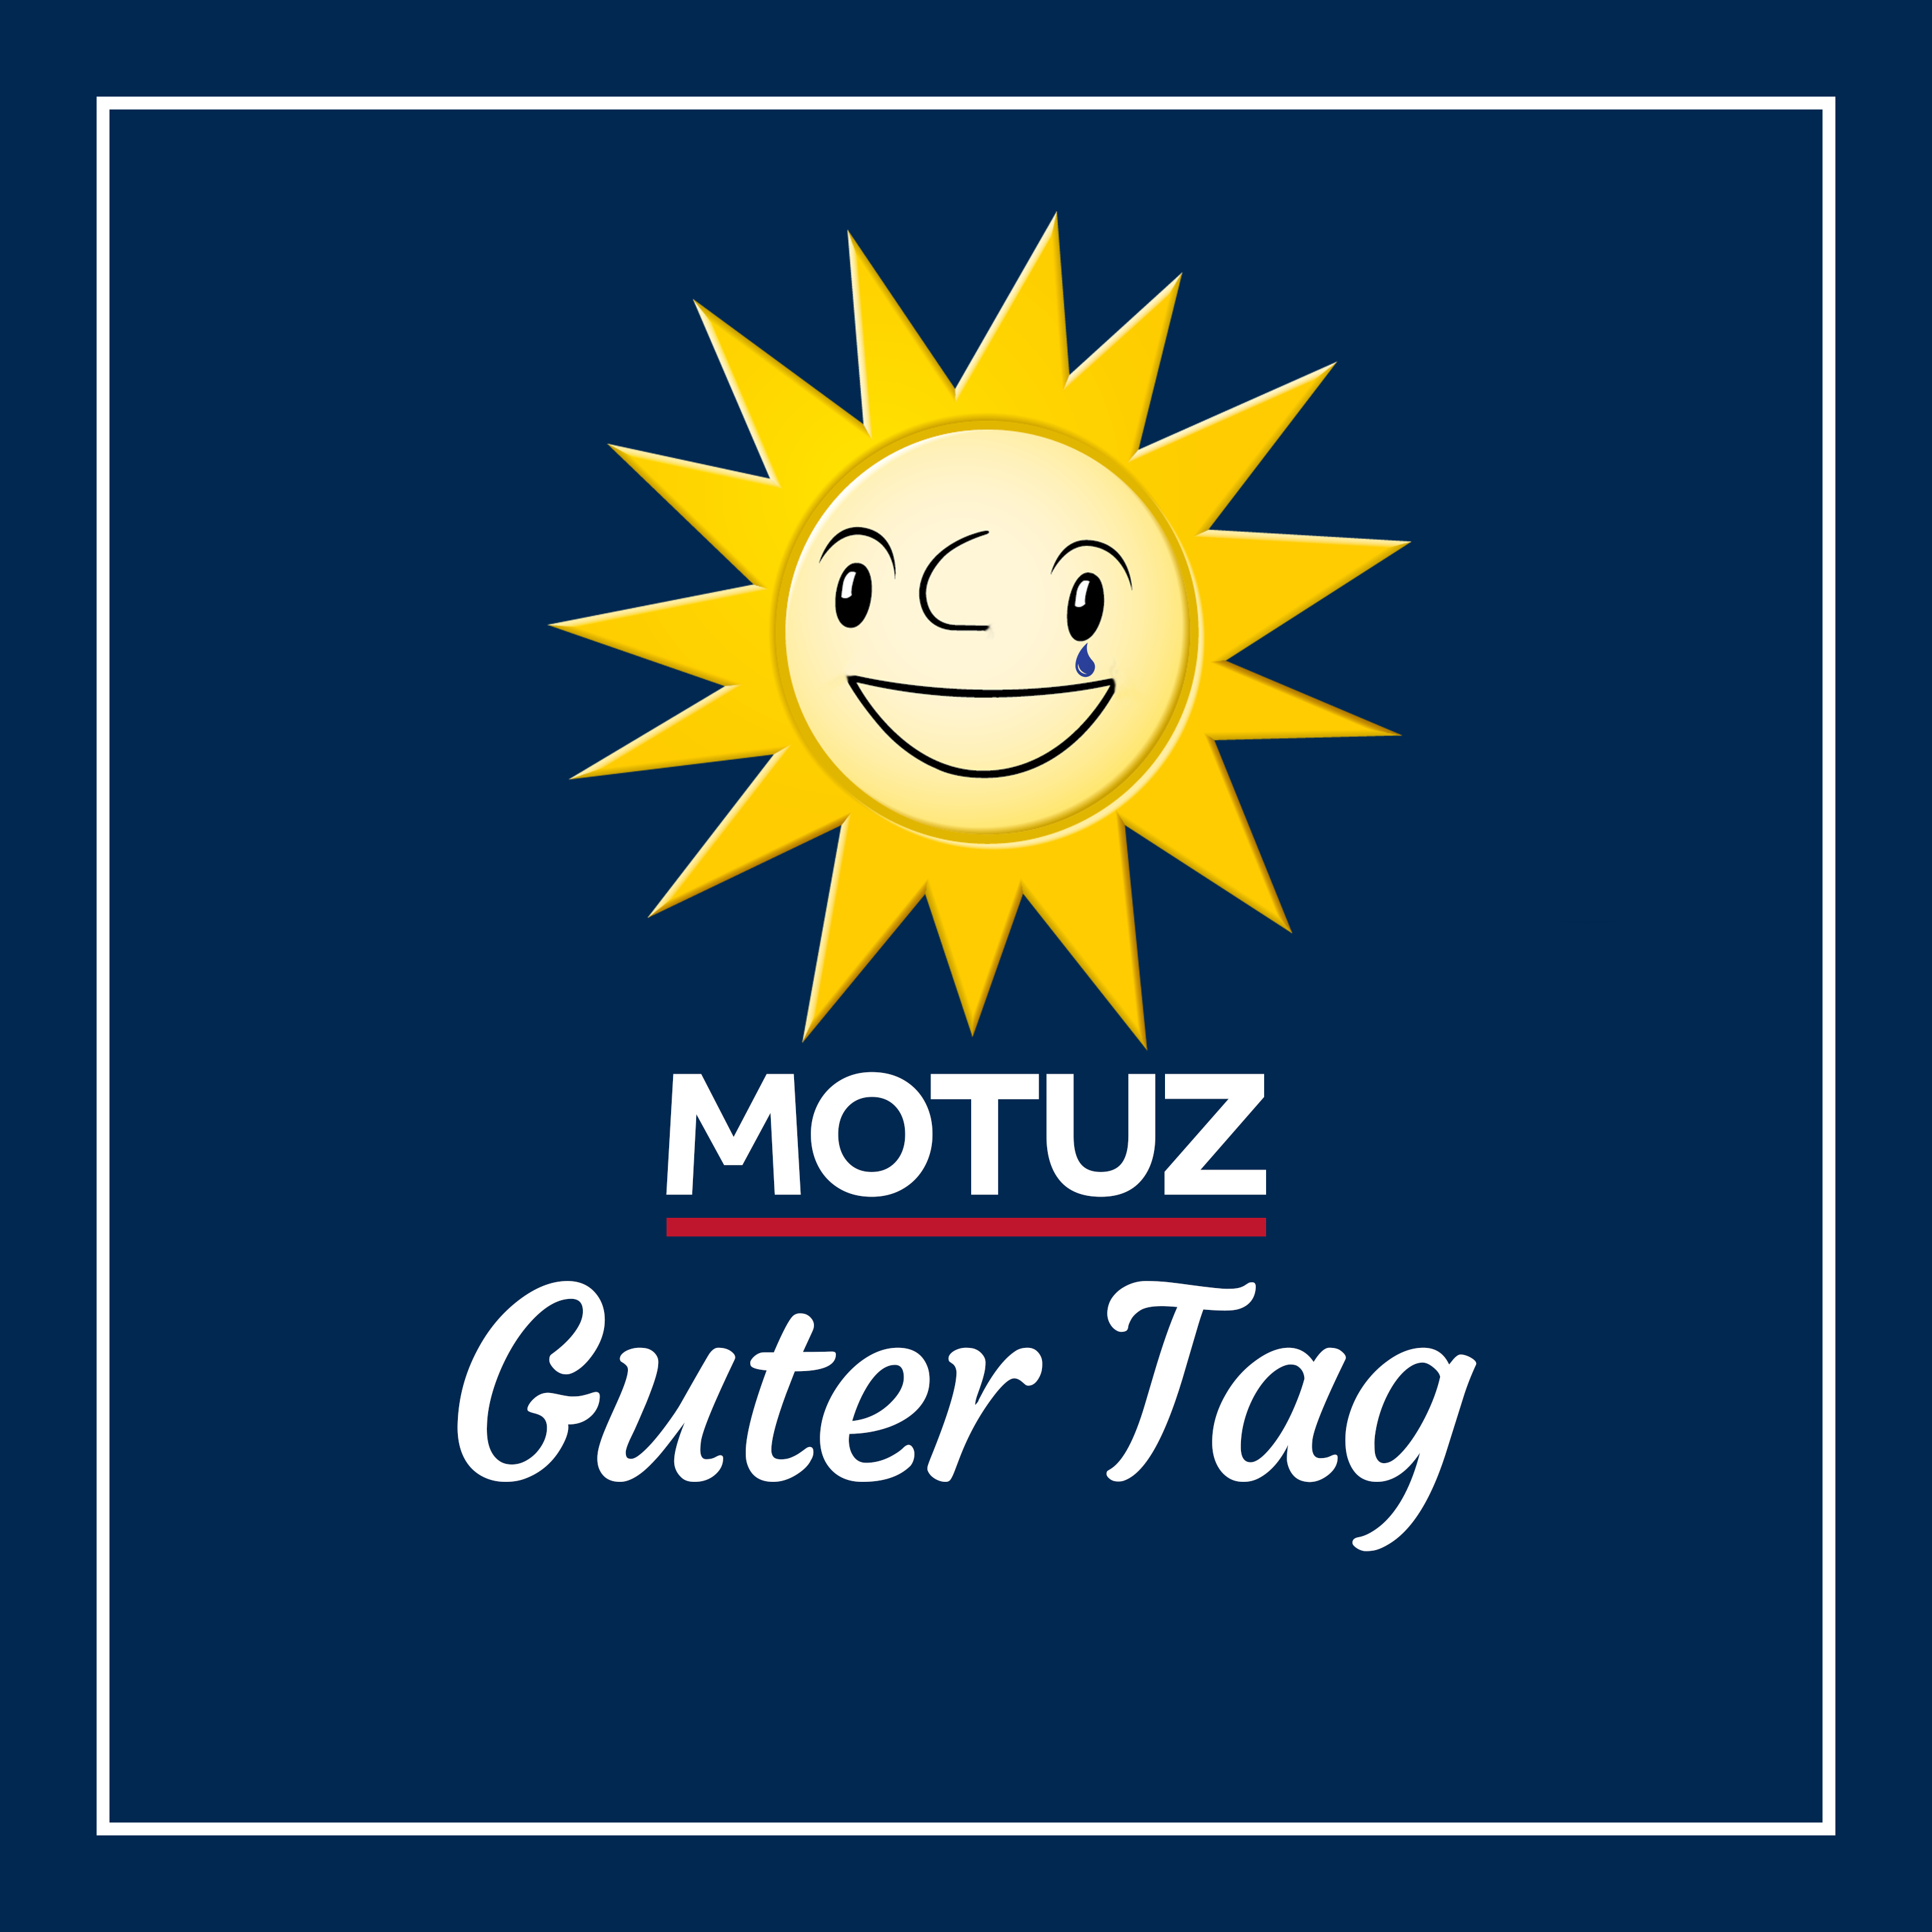 Motuz Guter Tag Box Copyright removed